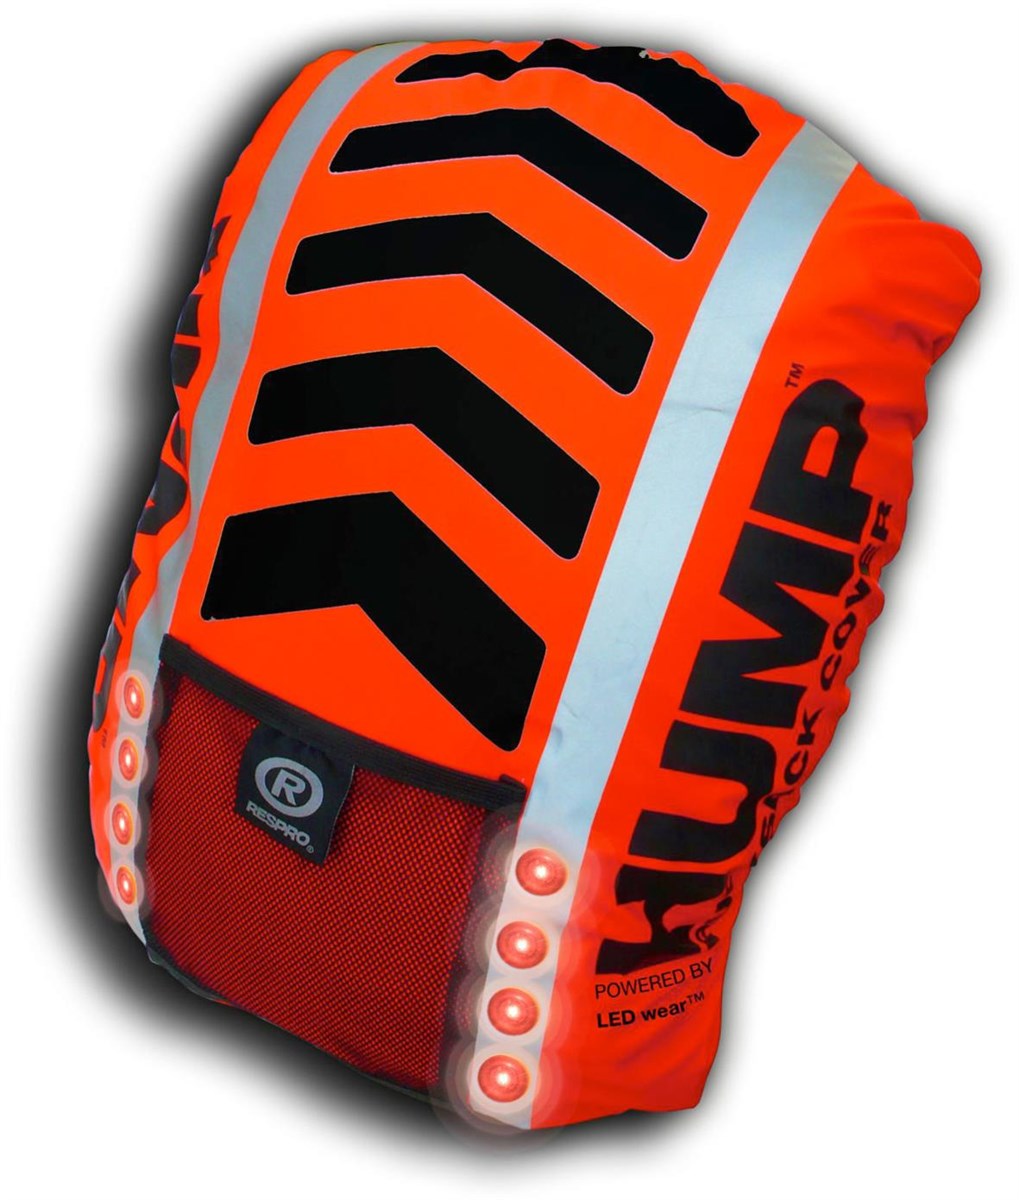 Hump Hi-Viz Vegas Illuminated Rucksack Cover product image